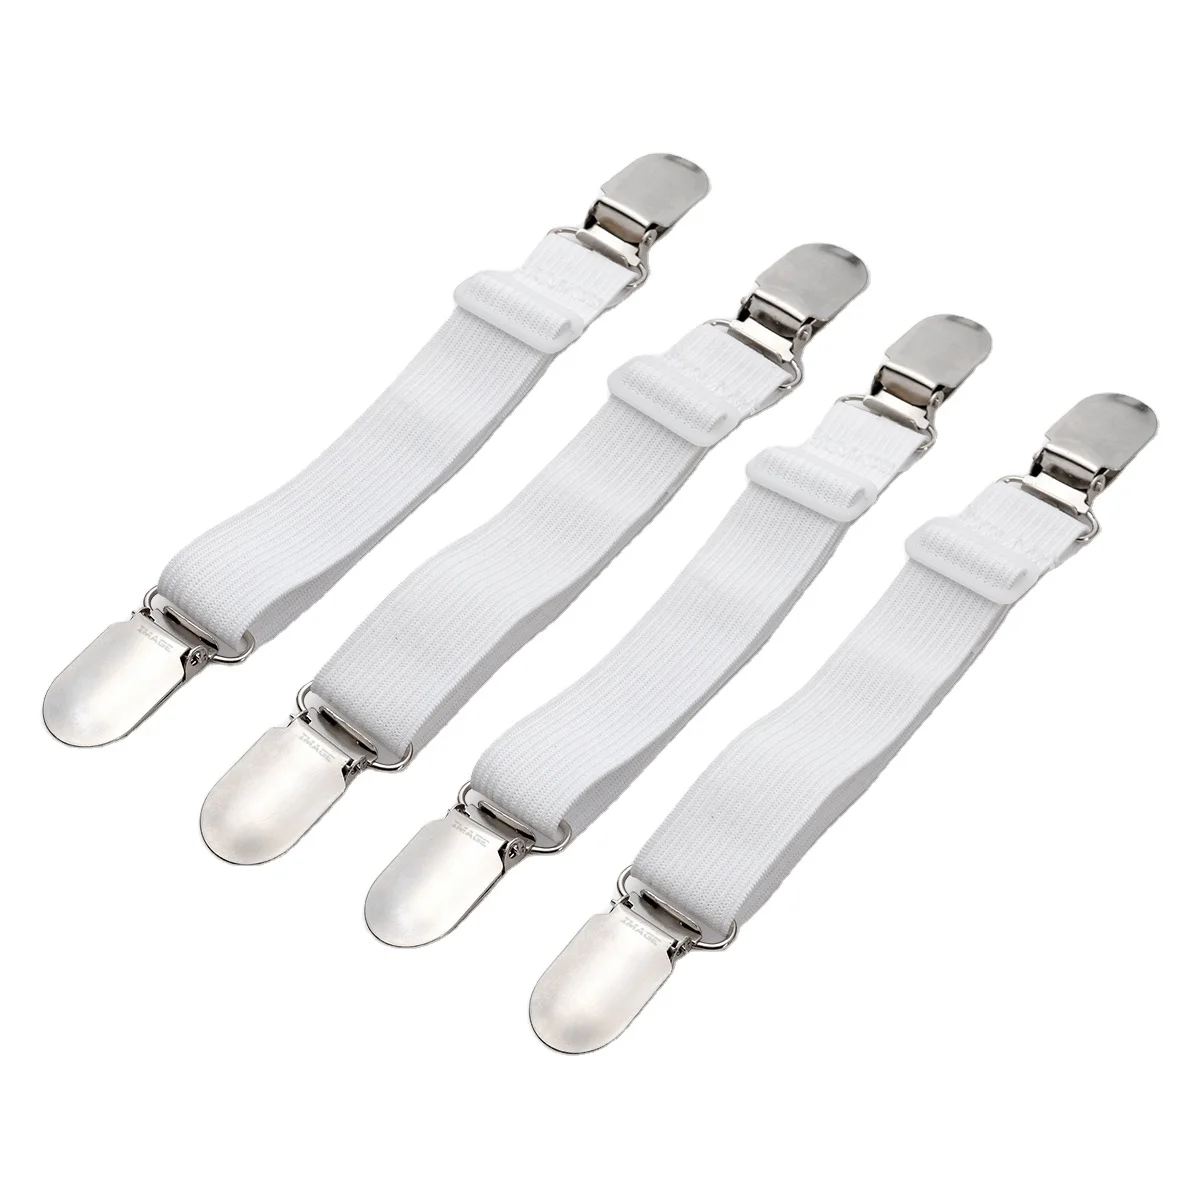 

4 PCS Adjustable Triangle Elastic Suspenders Gripper Holder Bed Sheet Straps Clips Fastener, Several colors